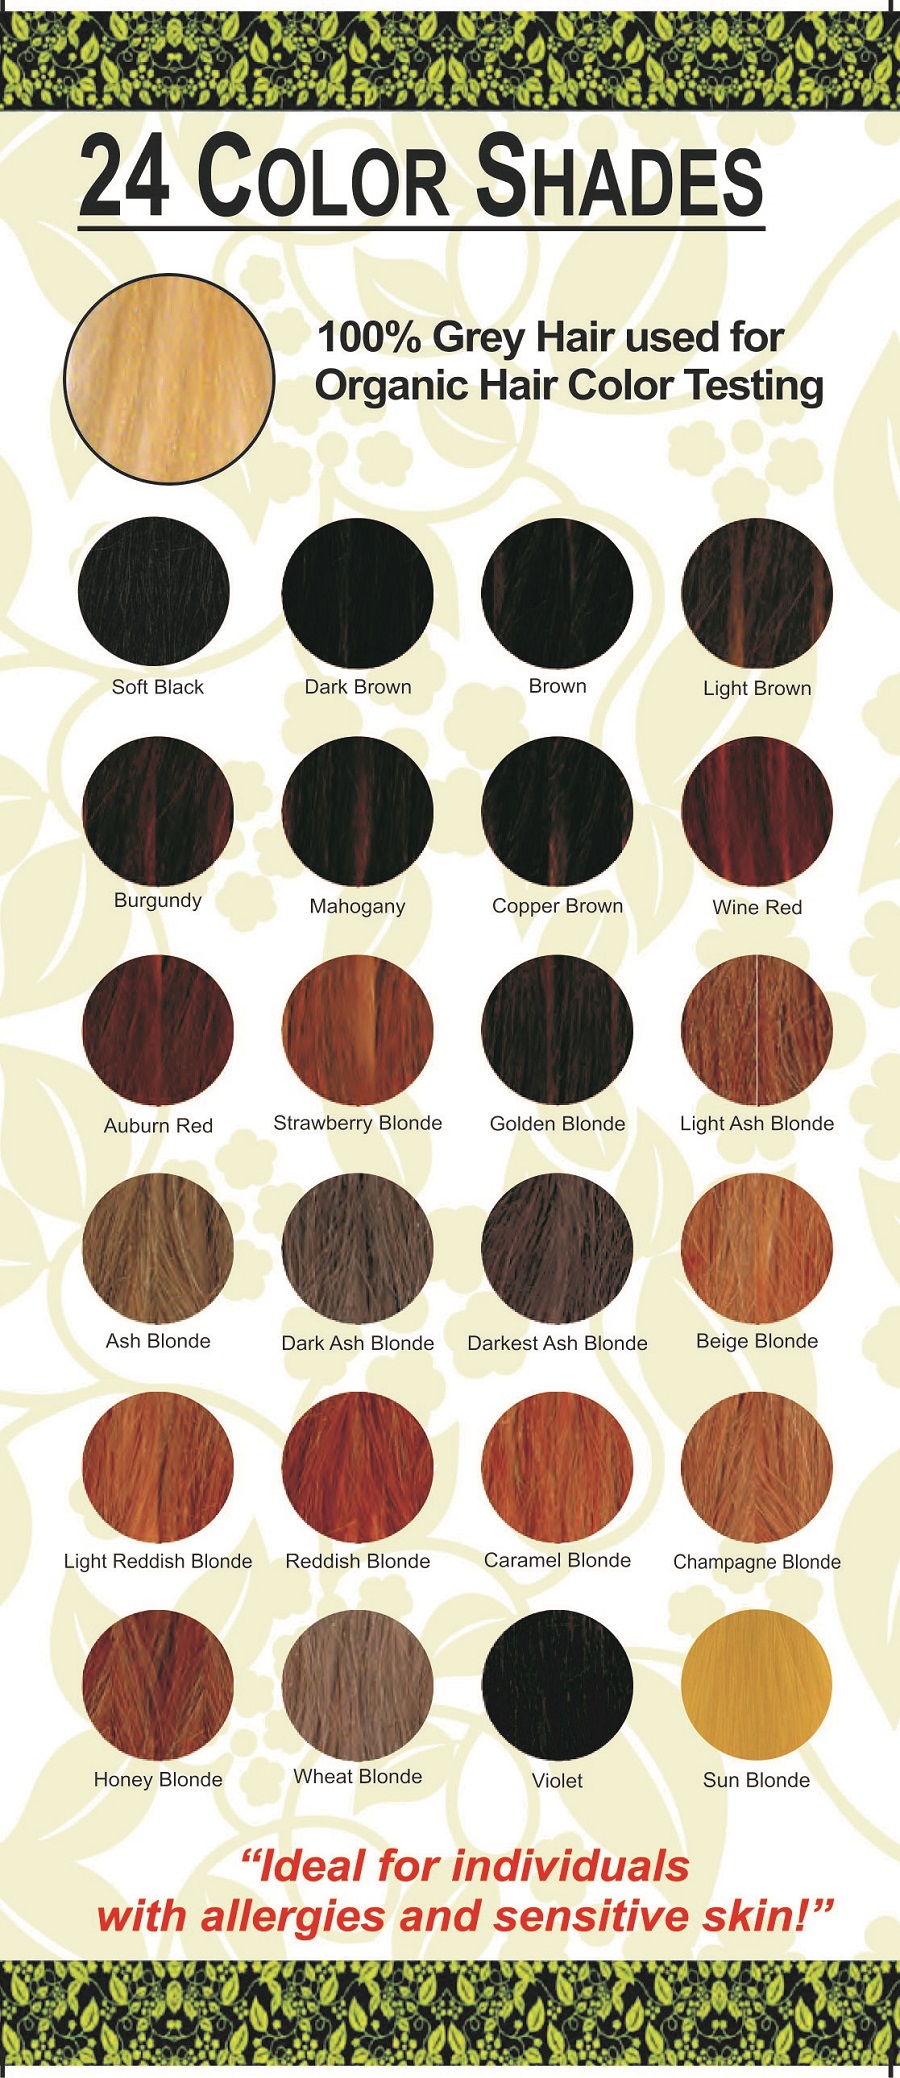 Radico + hair colour + Certified Organic Hair Color Dye - Red Shades + Mahogany (100 gm) + discount